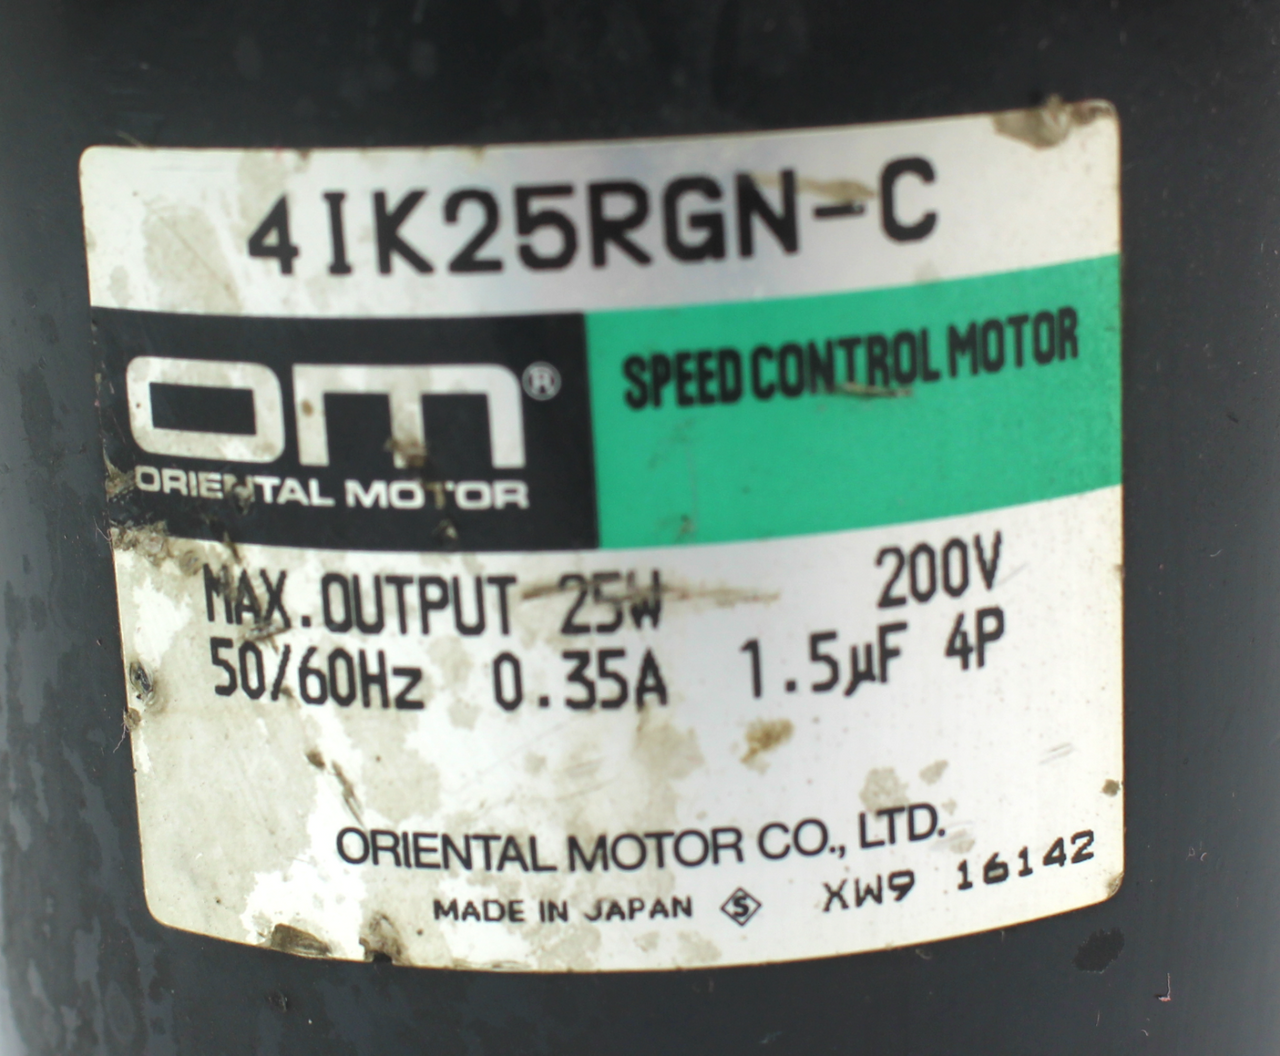 Oriental Motor 4IK25RGN-C Speed Control Motor, 200V